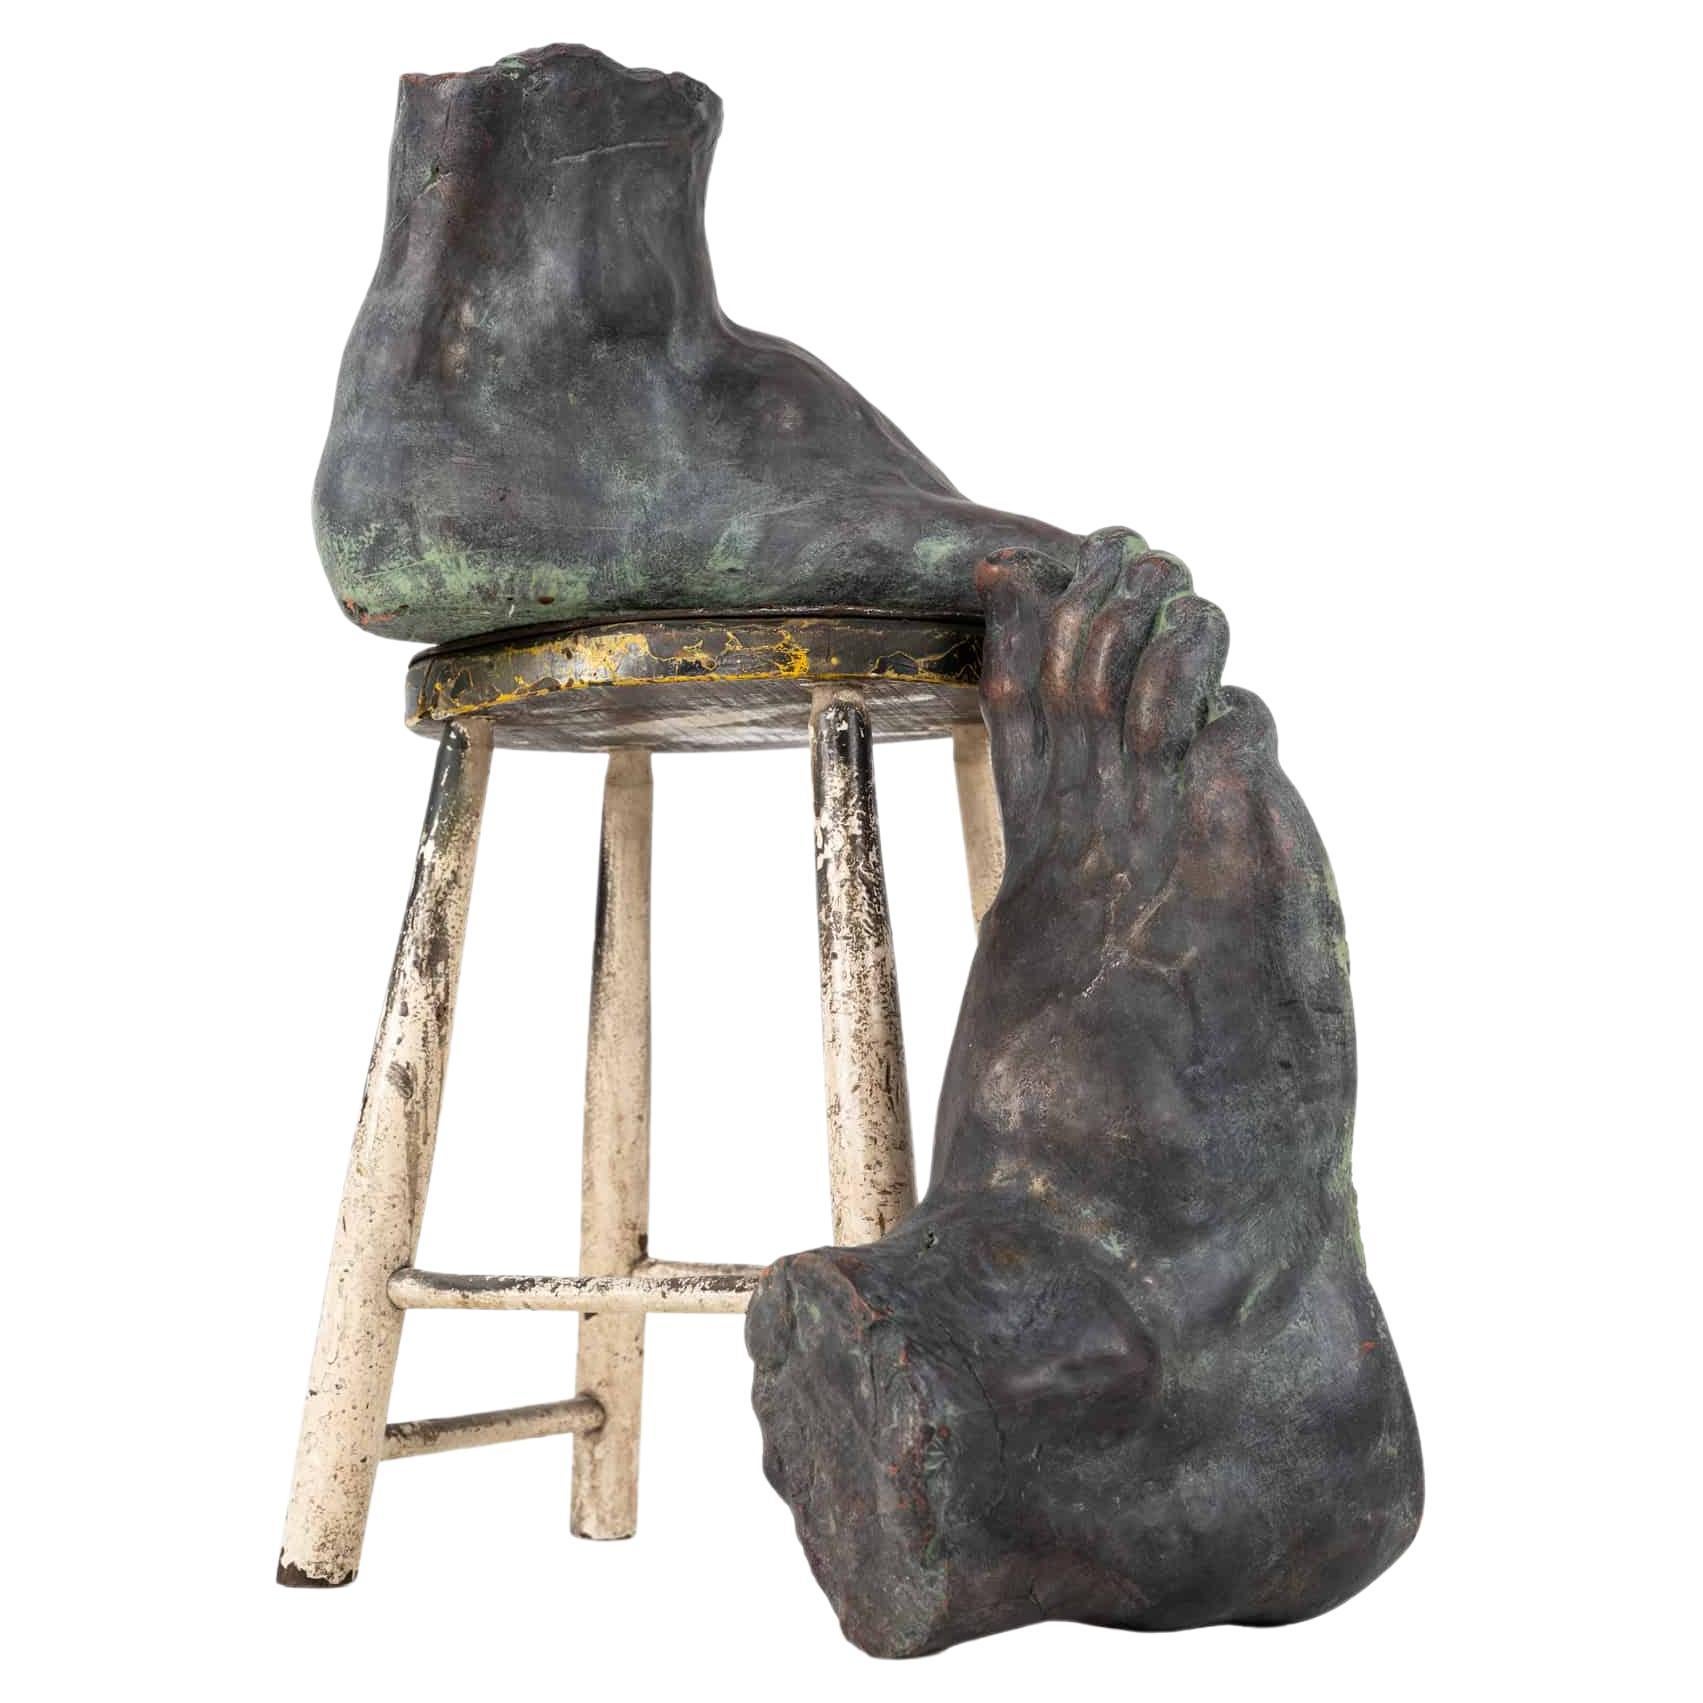 Oversized Faux Bronze Feet Cast in Plaster Sculpture